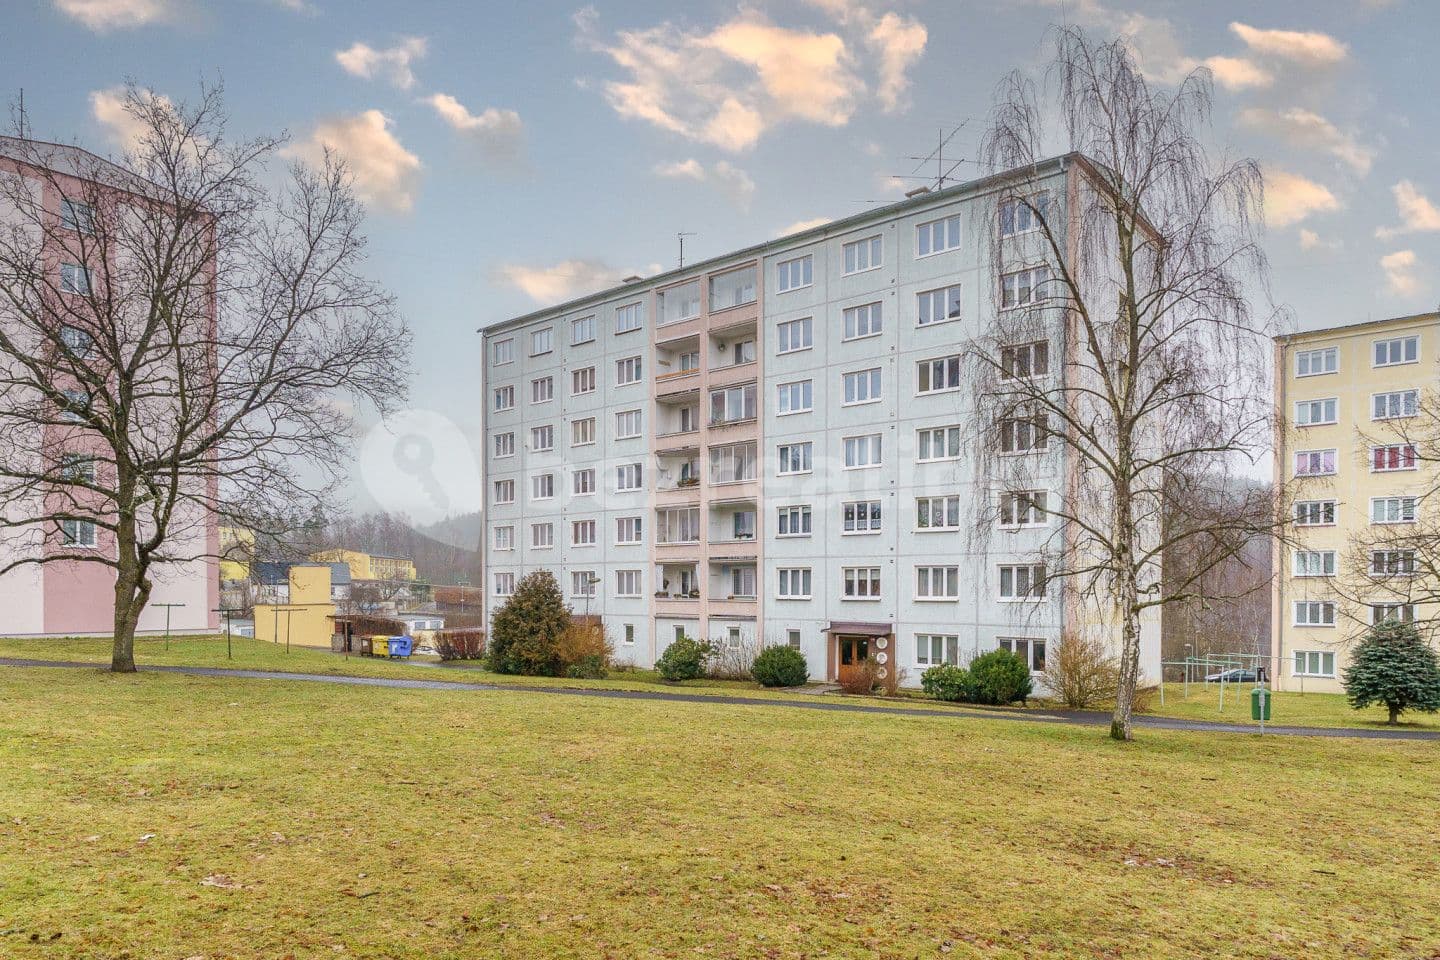 2 bedroom flat for sale, 53 m², Okružní, Nejdek, Karlovarský Region